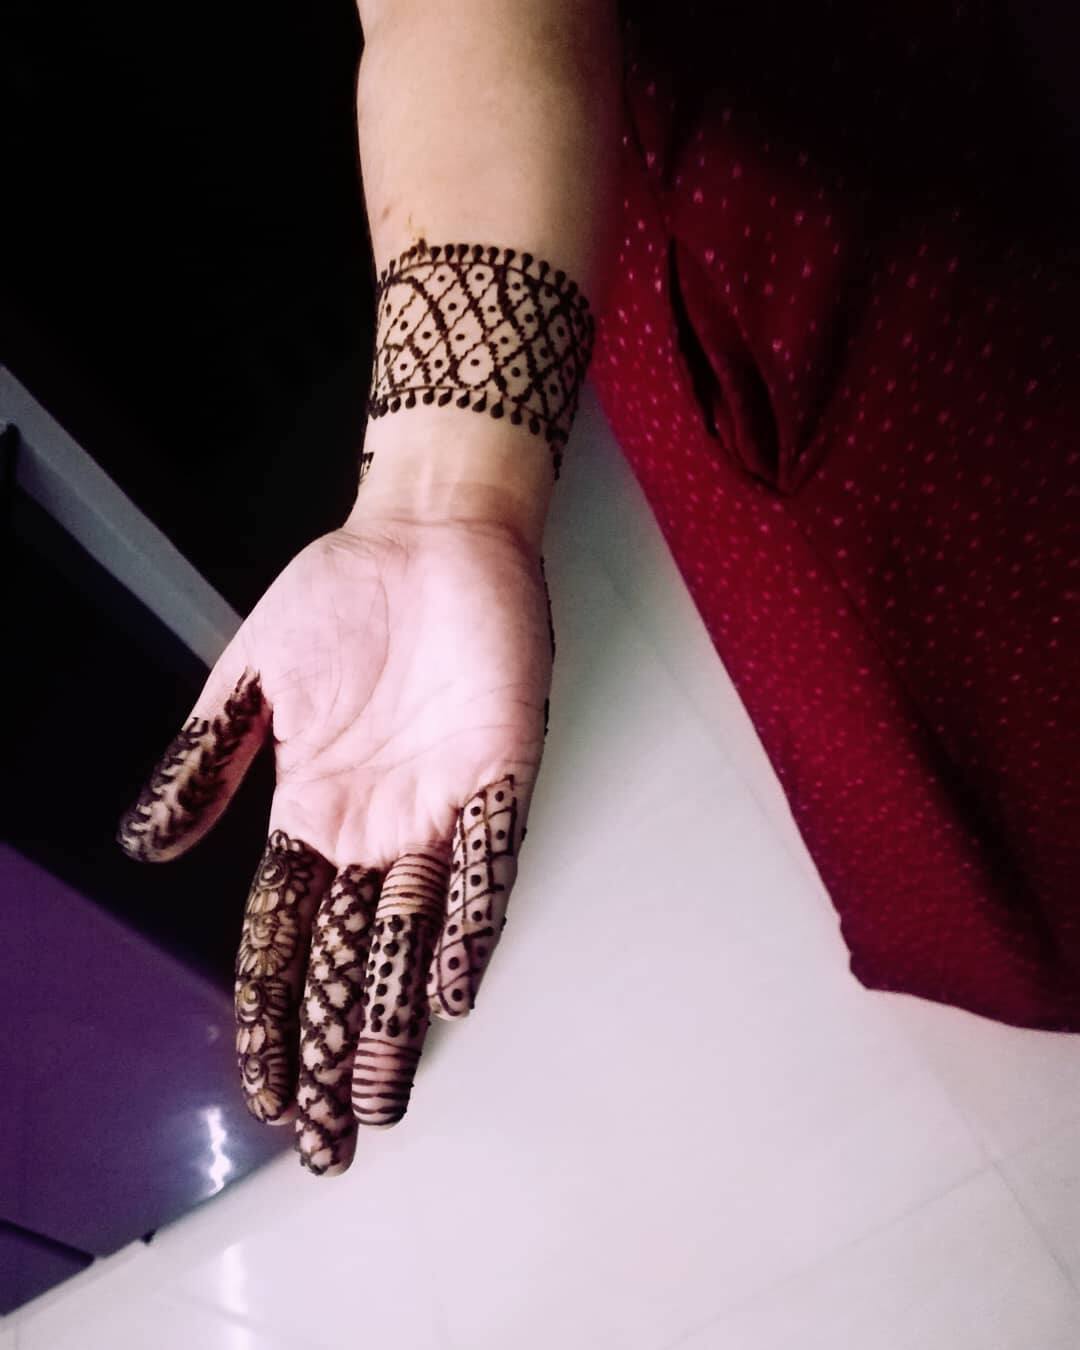 45 Trending Bangle mehndi designs for hands || Kangan mehndi designs |  Bling Sparkle